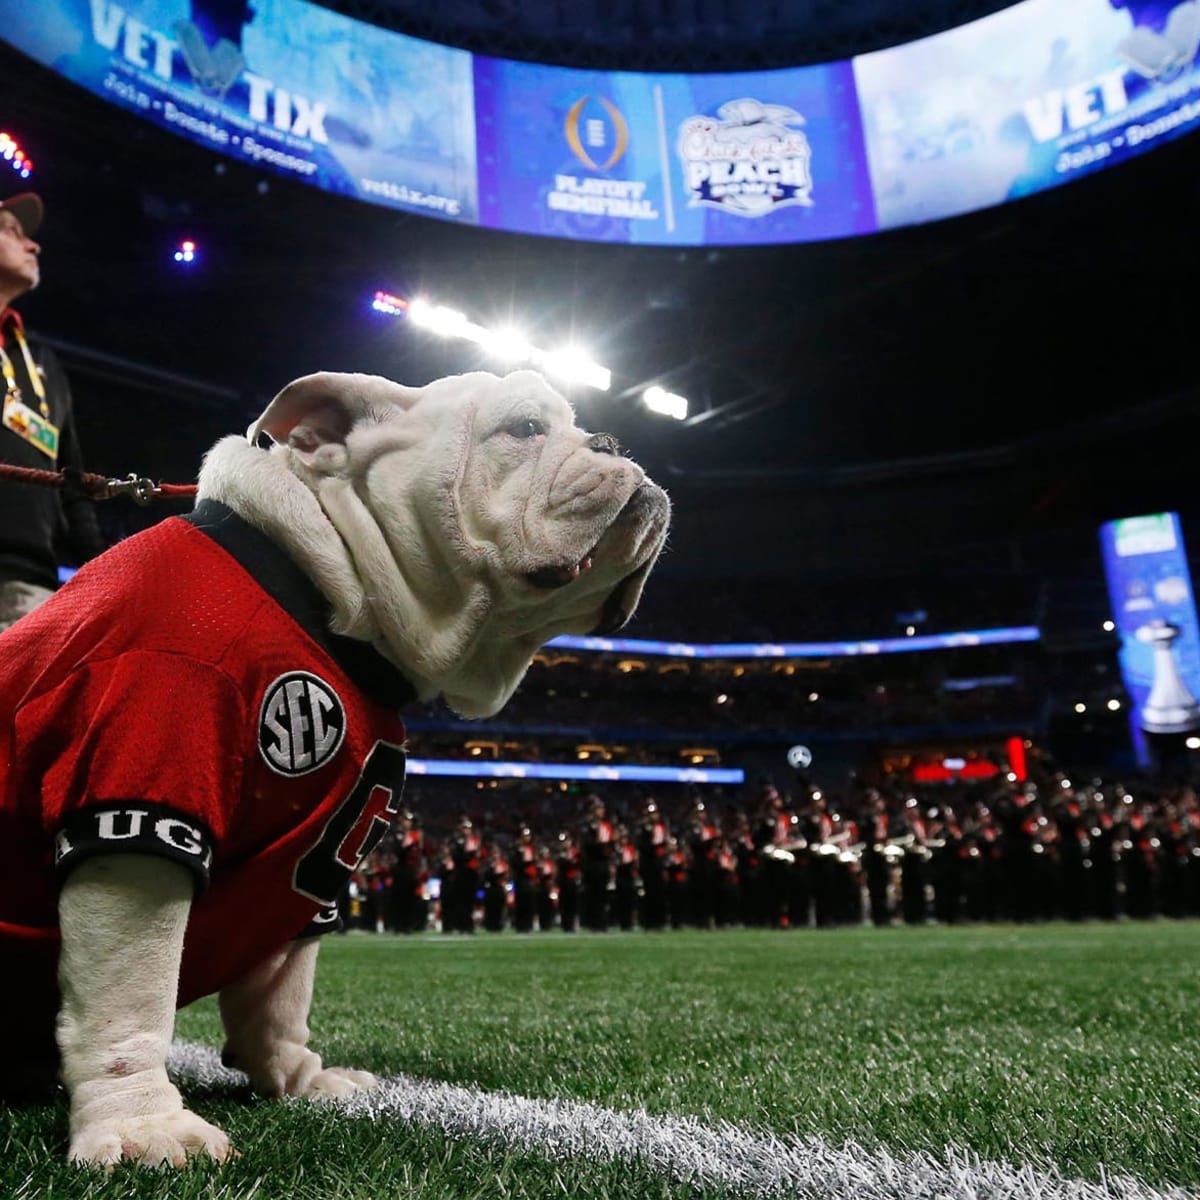 PETA calls out Georgia for 'outdated' use of live bulldog mascot